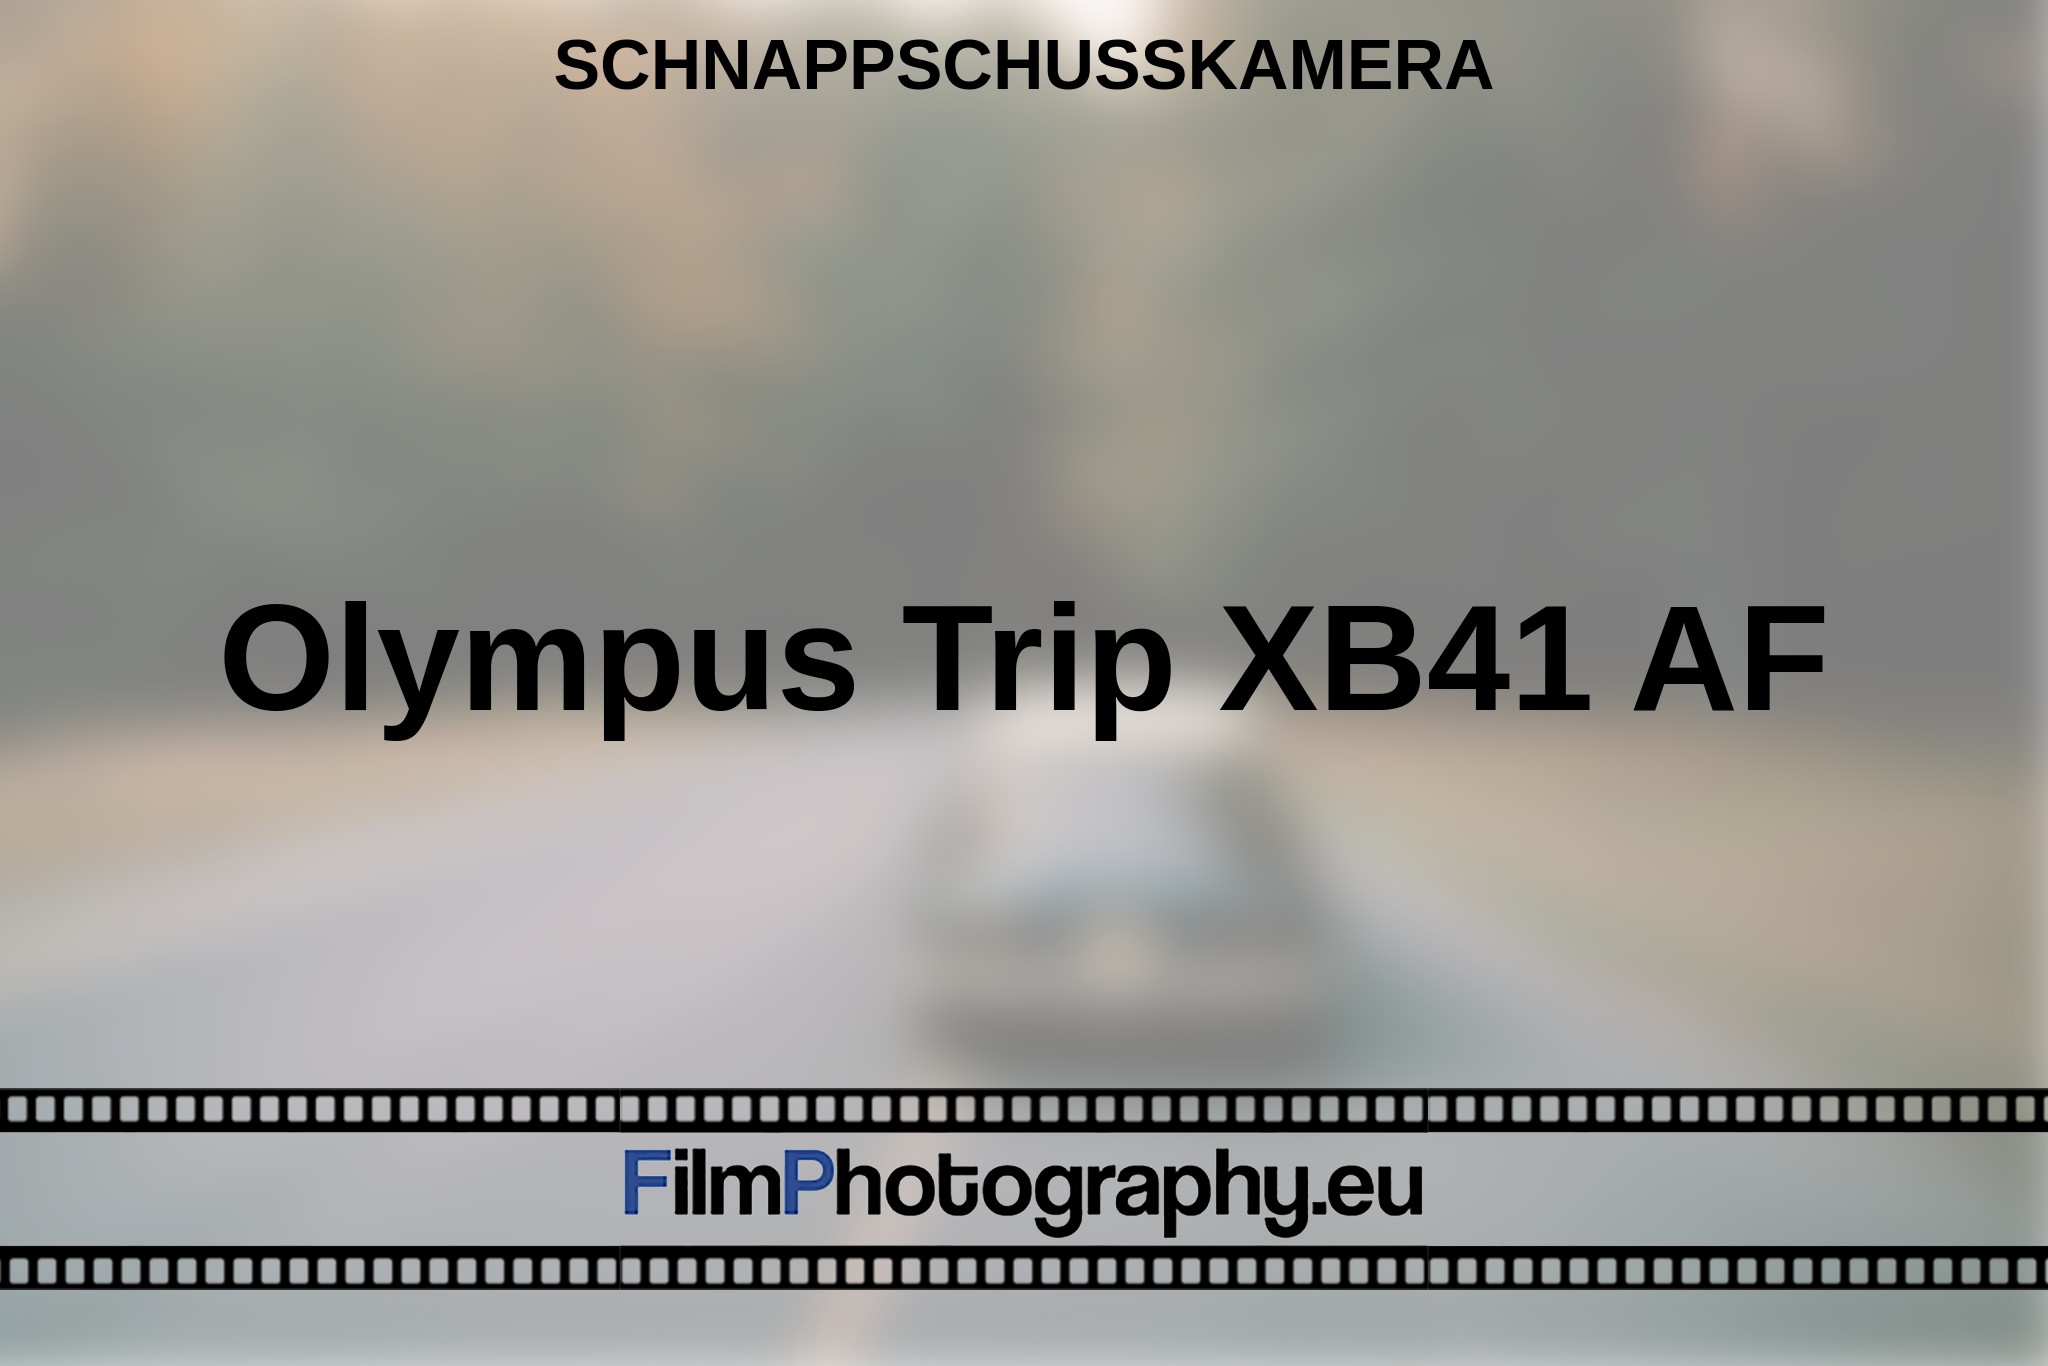 olympus-trip-xb41-af-schnappschusskamera-bnv.jpg